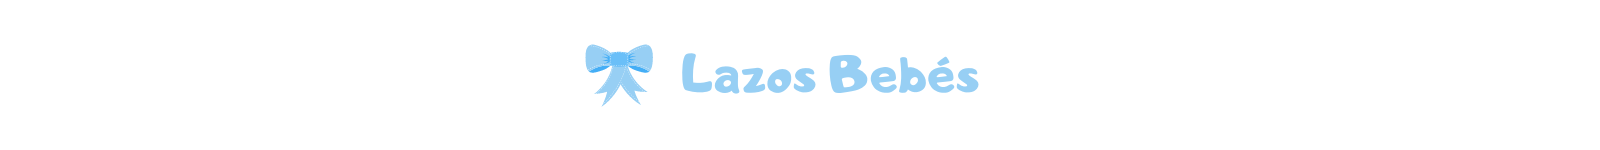 www.lazosbebes.com